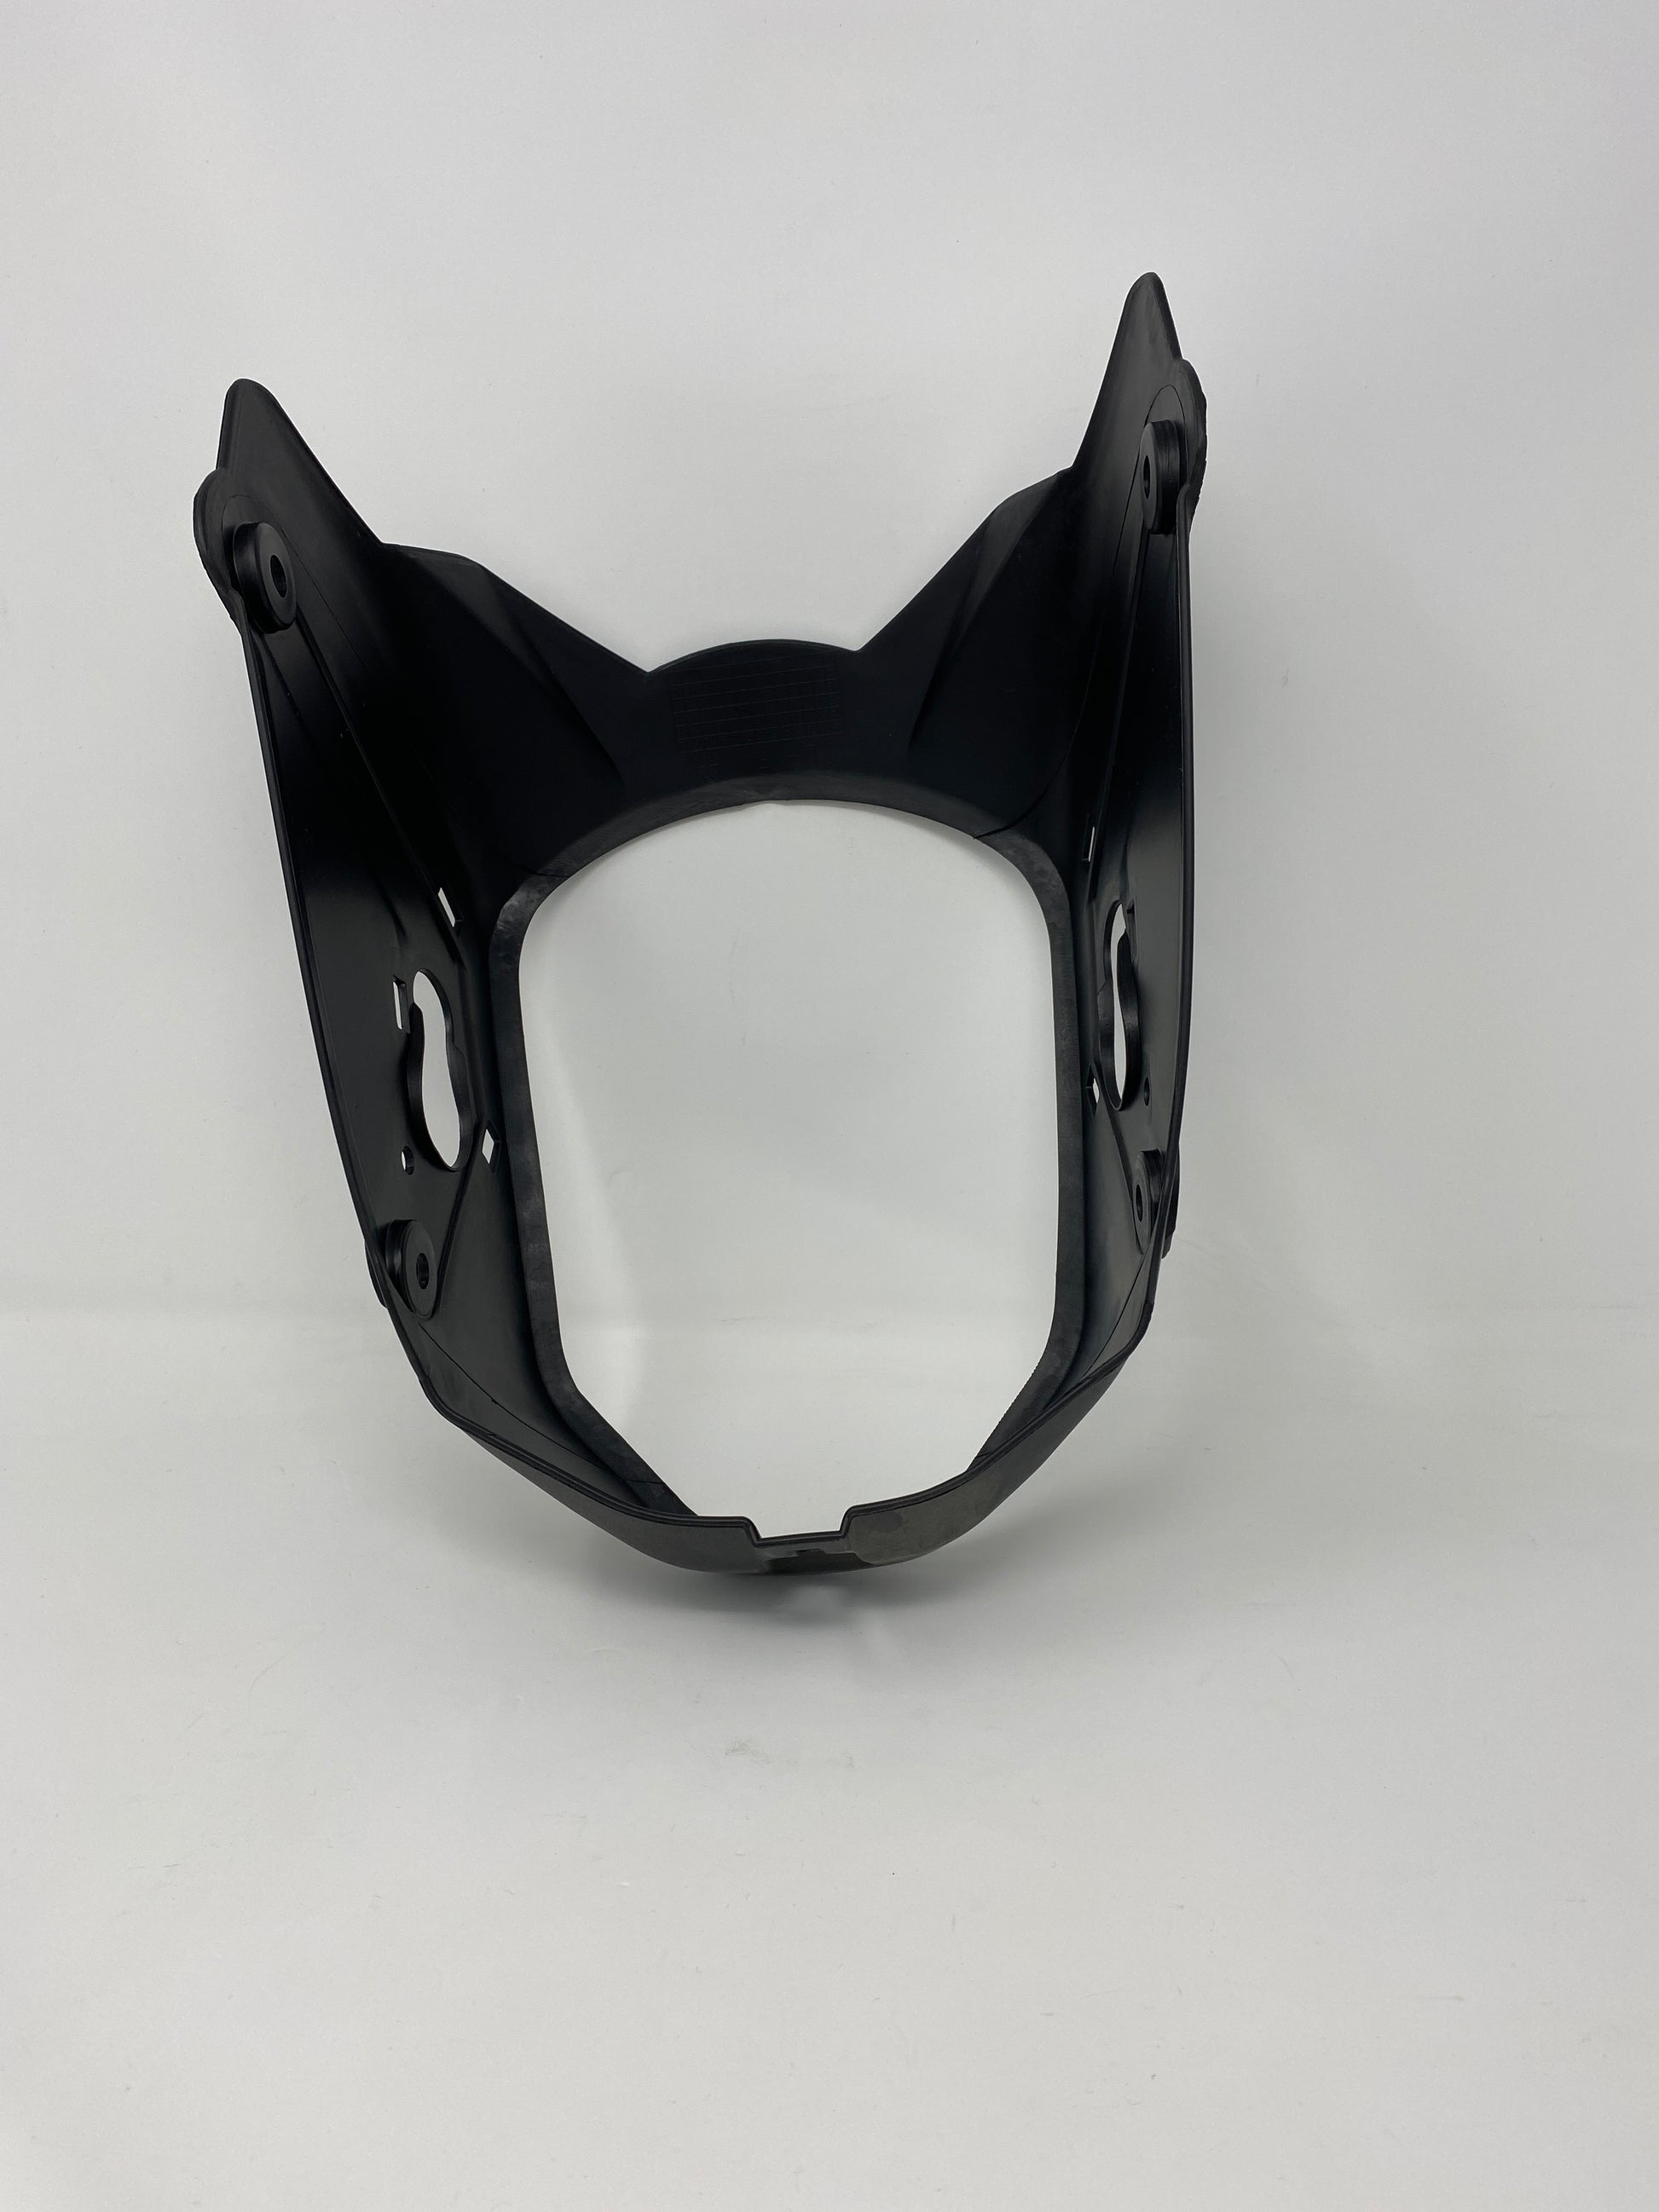 BD125-15 headlight plastic for sale. Buy Vader Gen 1 fairings online.